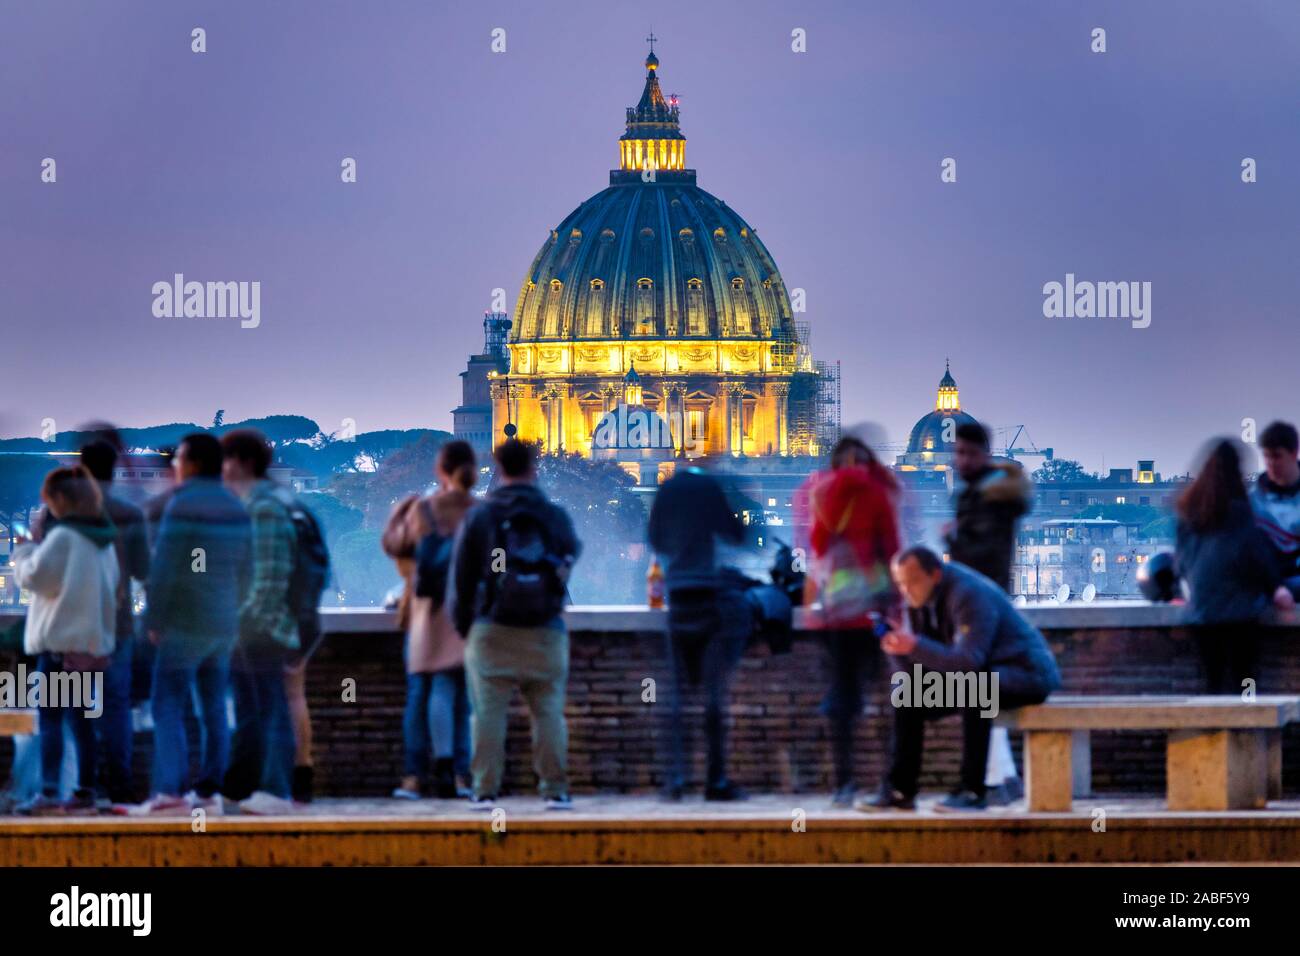 Viewpoint of the Giardino degli Aranci, Rome, Italy Stock Photo